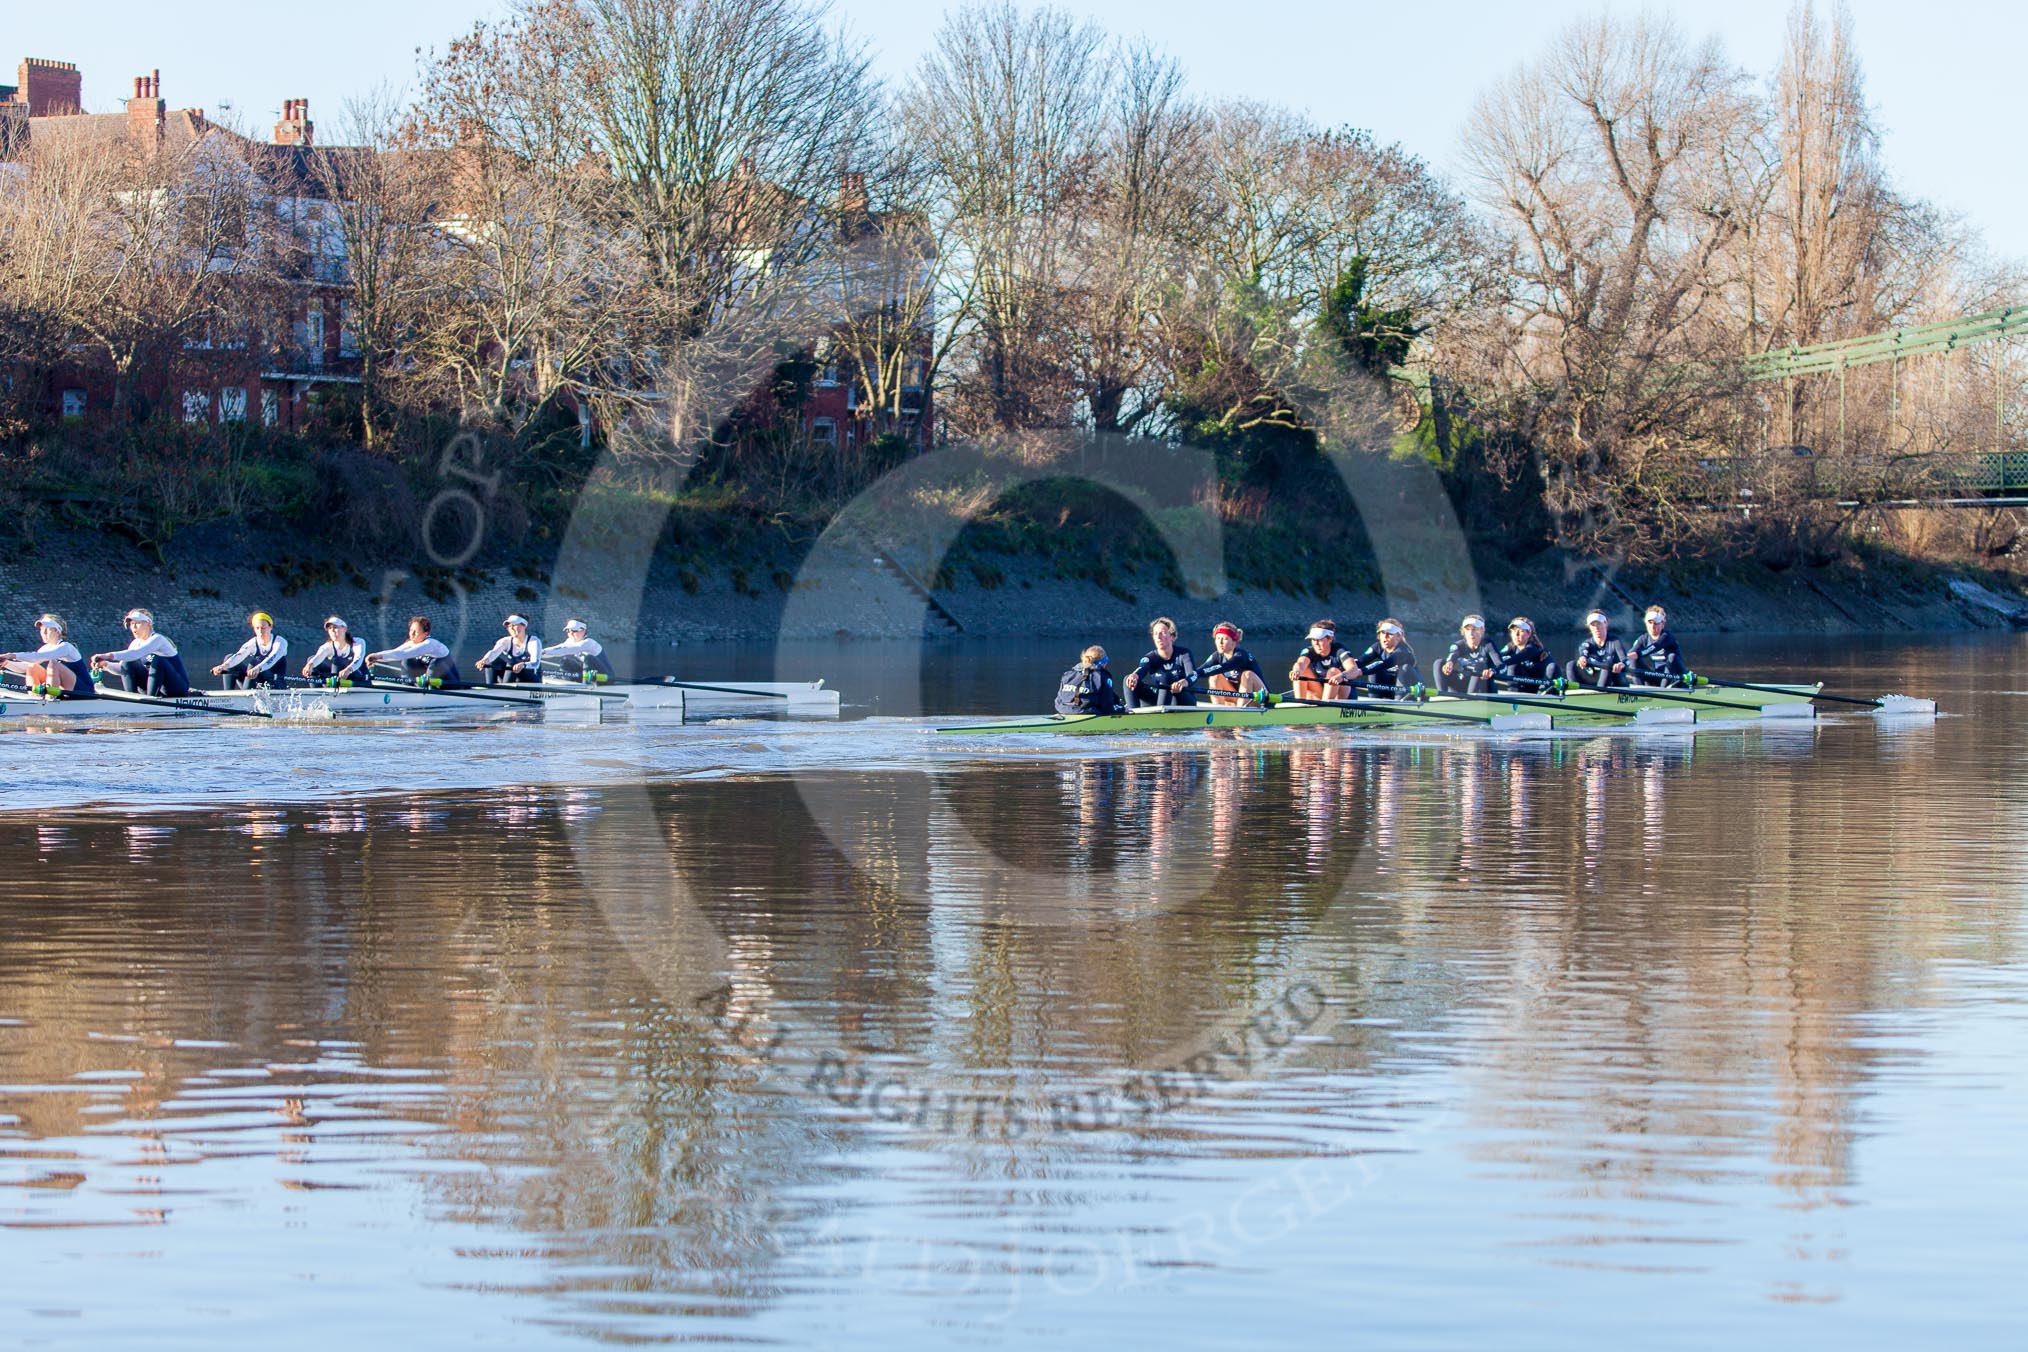 The Boat Race season 2014 - Women's Trial VIIIs (OUWBC, Oxford): Boudicca vs Cleopatra..
River Thames between Putney Bridge and Mortlake,
London SW15,

United Kingdom,
on 19 December 2013 at 12:49, image #120